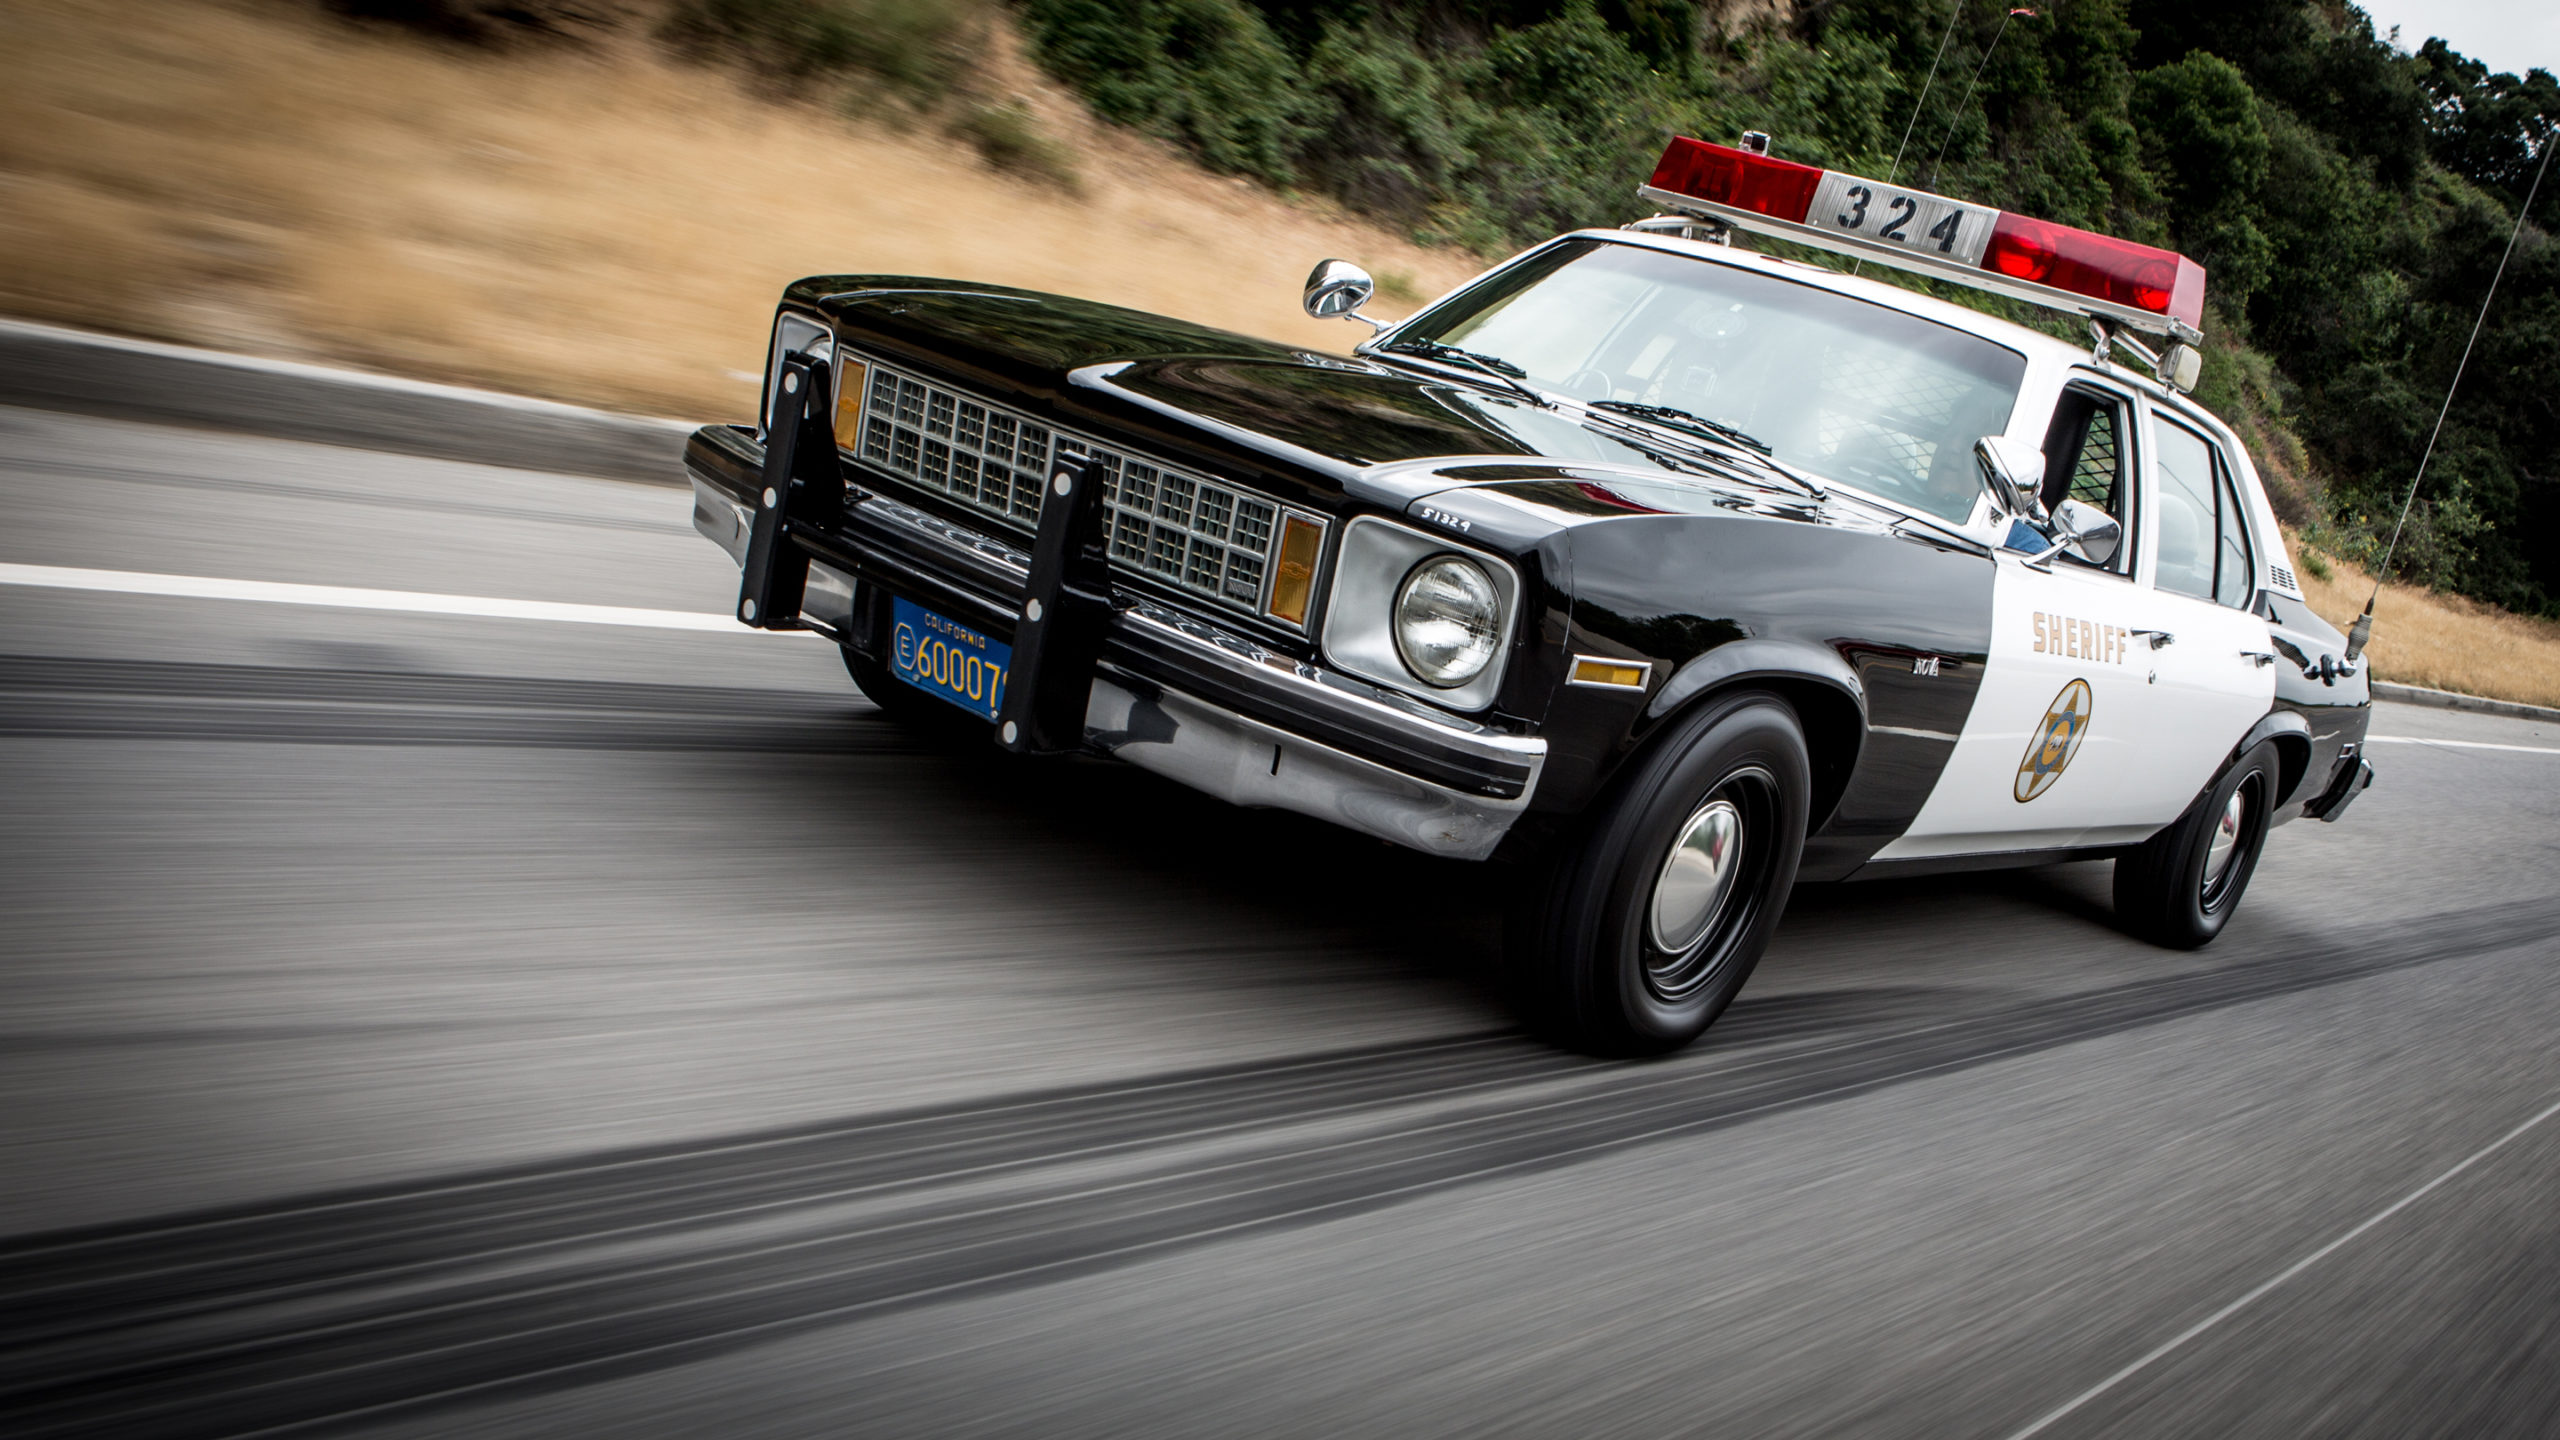 Chevy II Nova Retrospective | THE SHOP